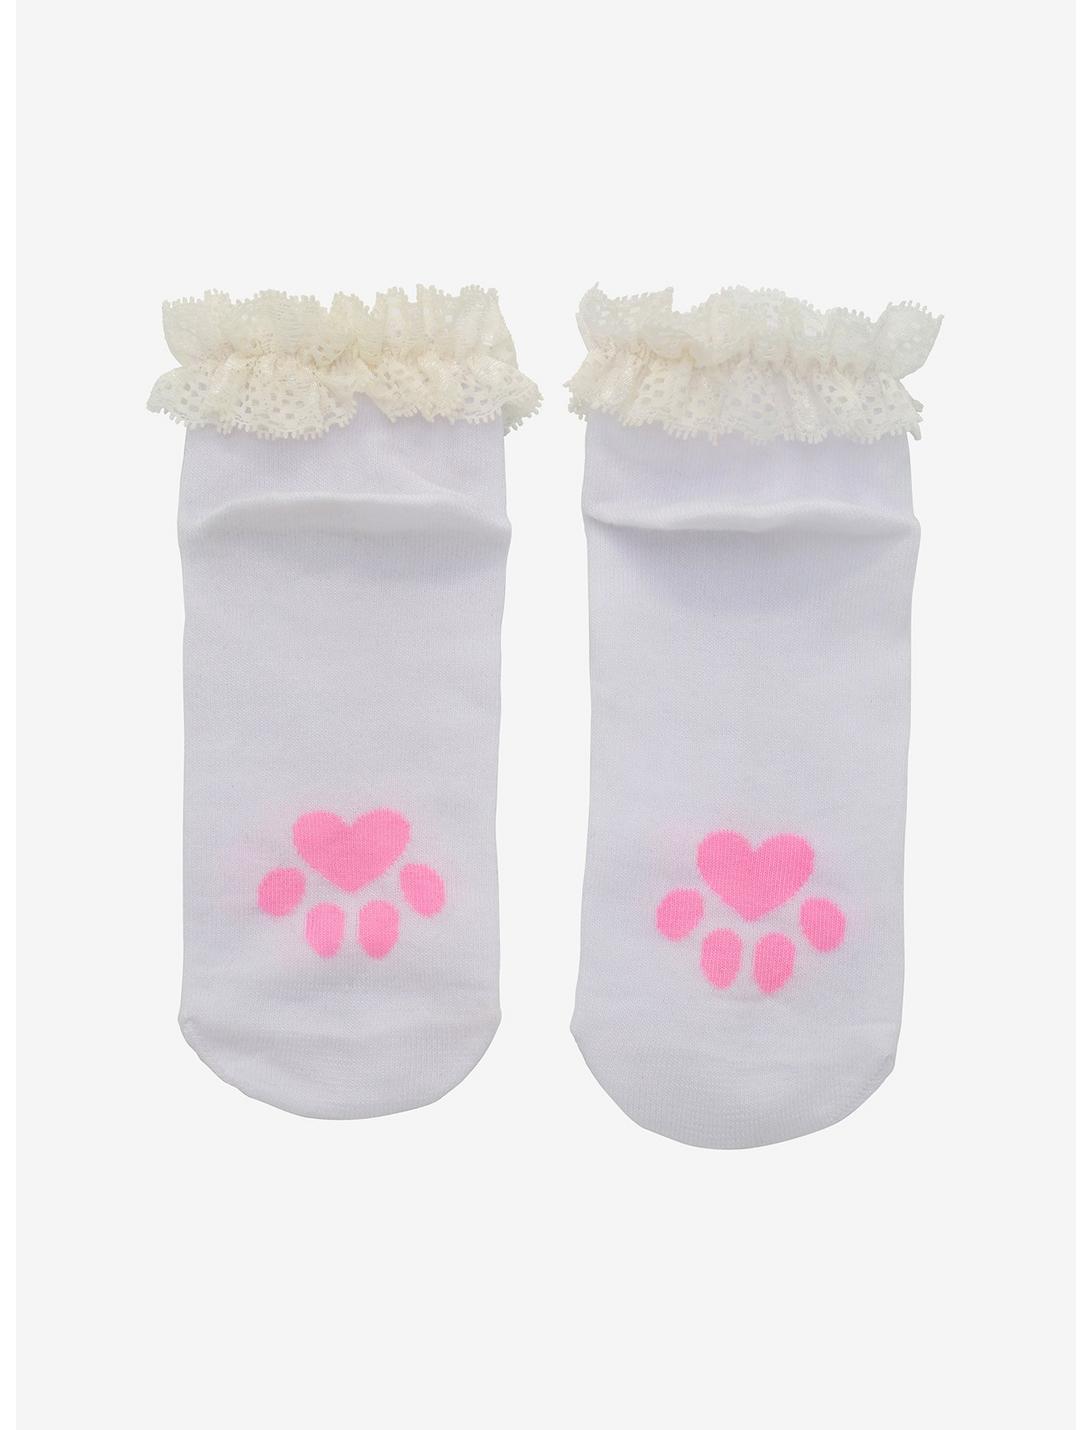 White Lace Paw Print Ankle Socks, , hi-res